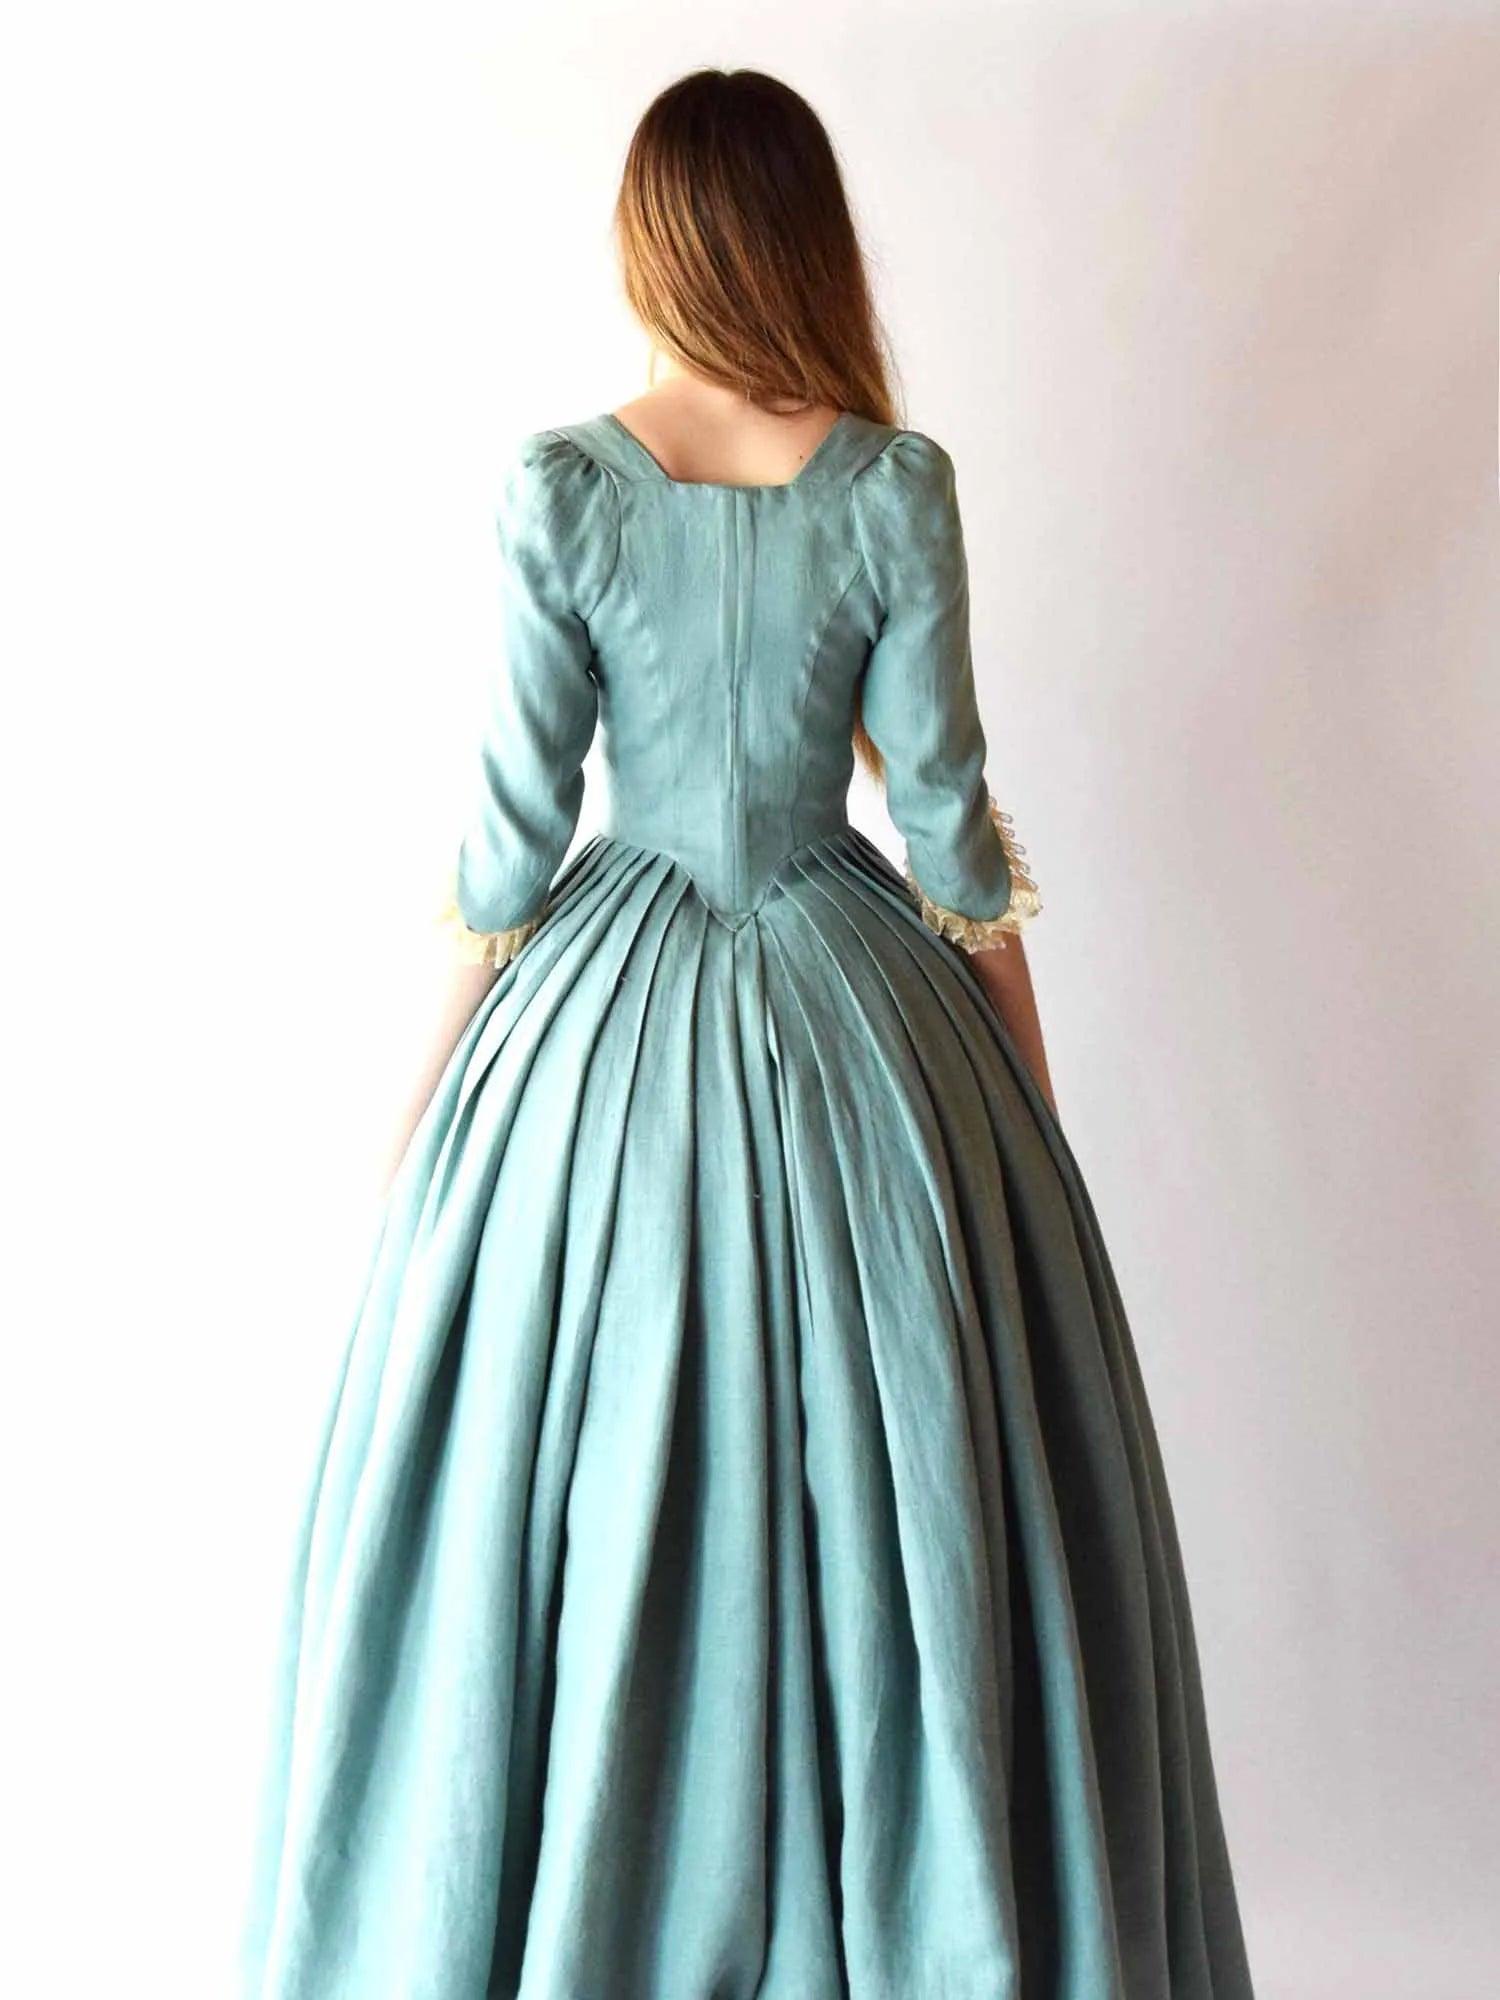 LOUISE, 18th-Century Dress in Almond Green Linen - Atelier Serraspina